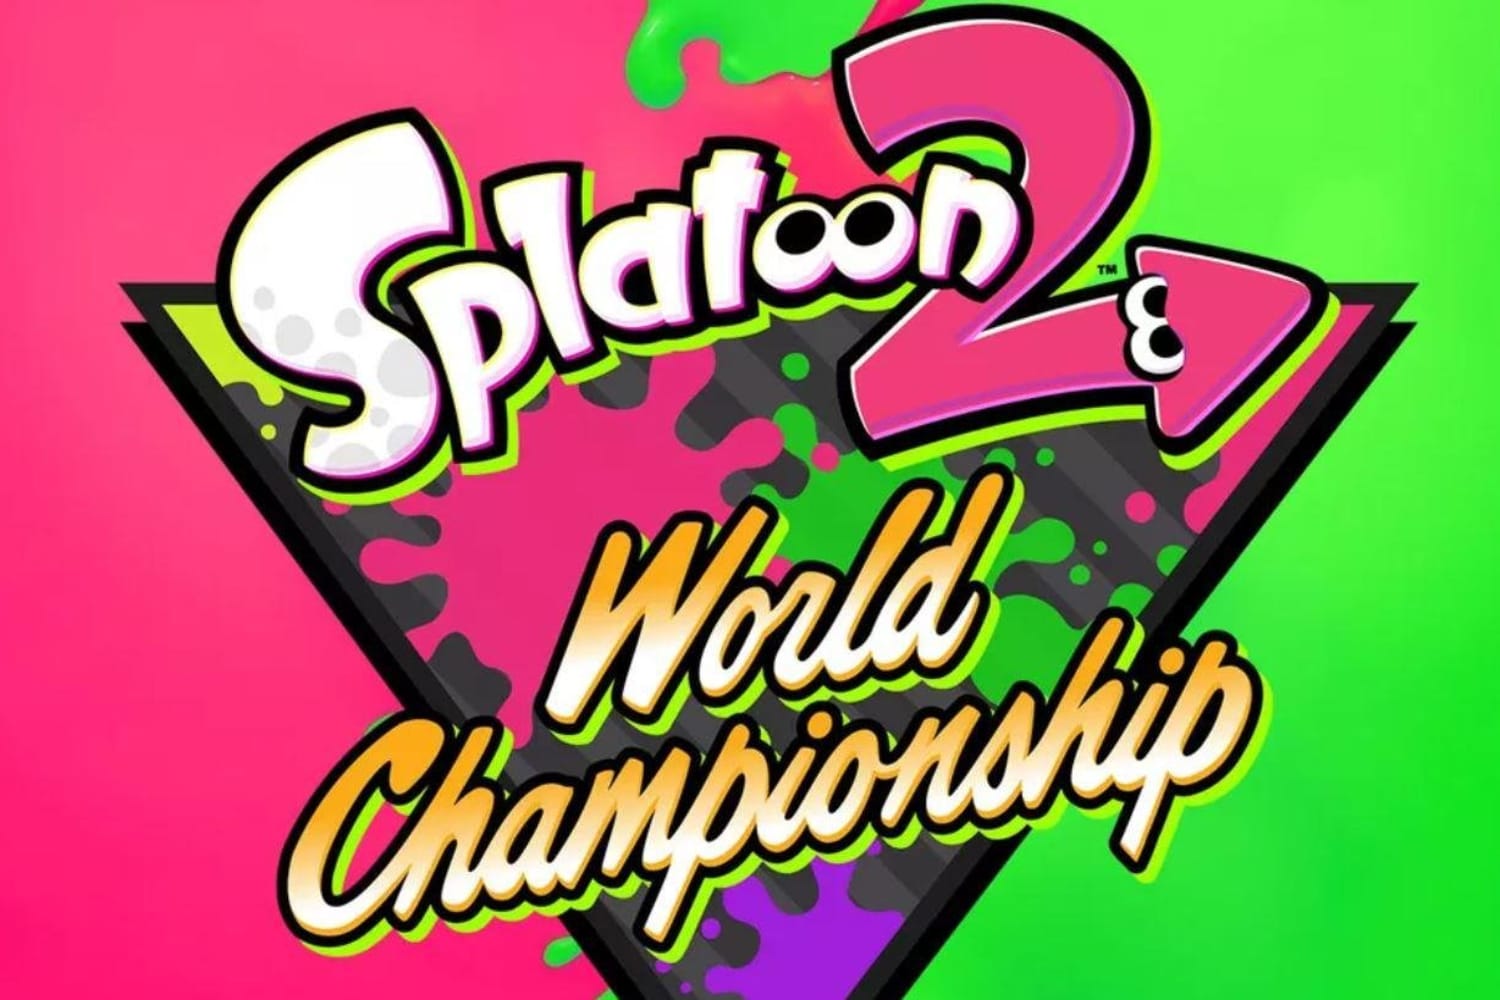 Le Splatoon 2 World Championship à l’E3 2018 ! esport